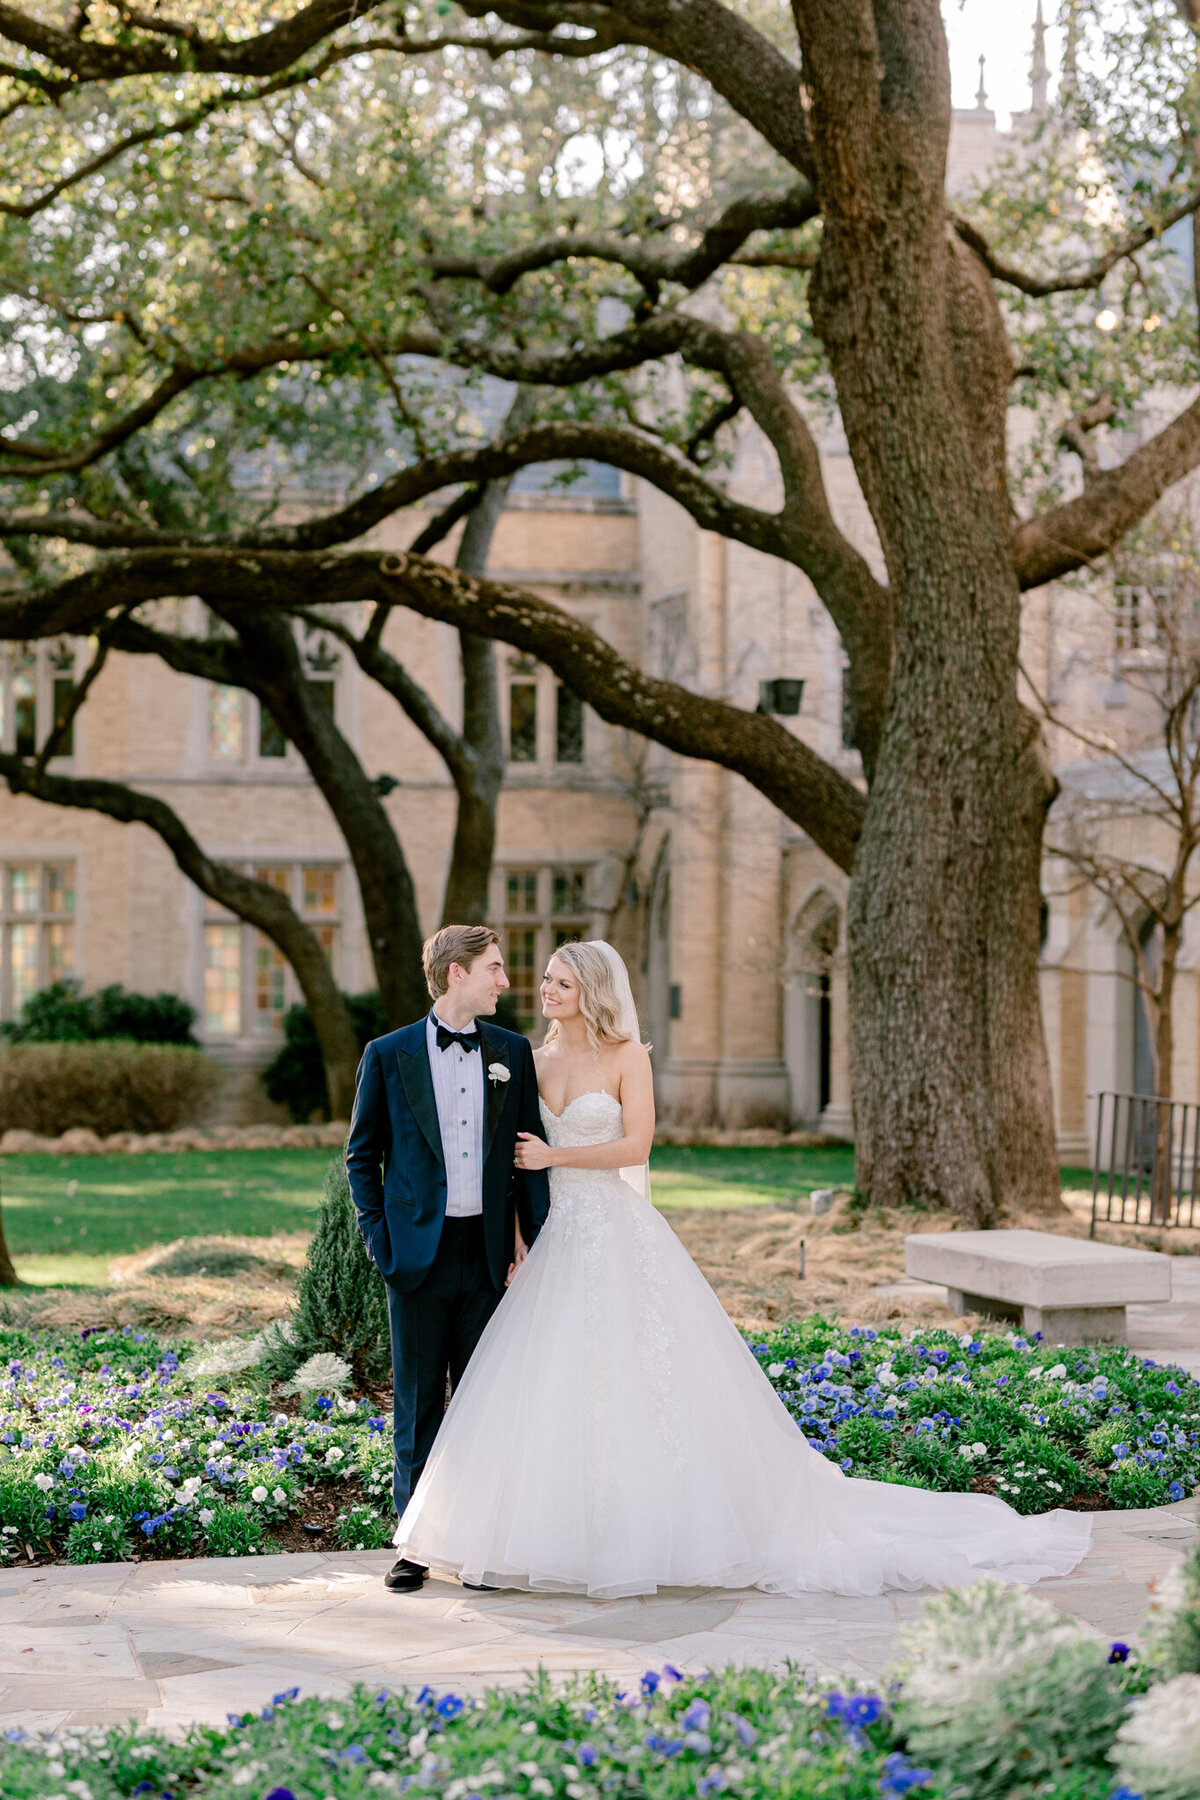 Shelby & Thomas's Wedding at HPUMC The Room on Main | Dallas Wedding Photographer | Sami Kathryn Photography-162